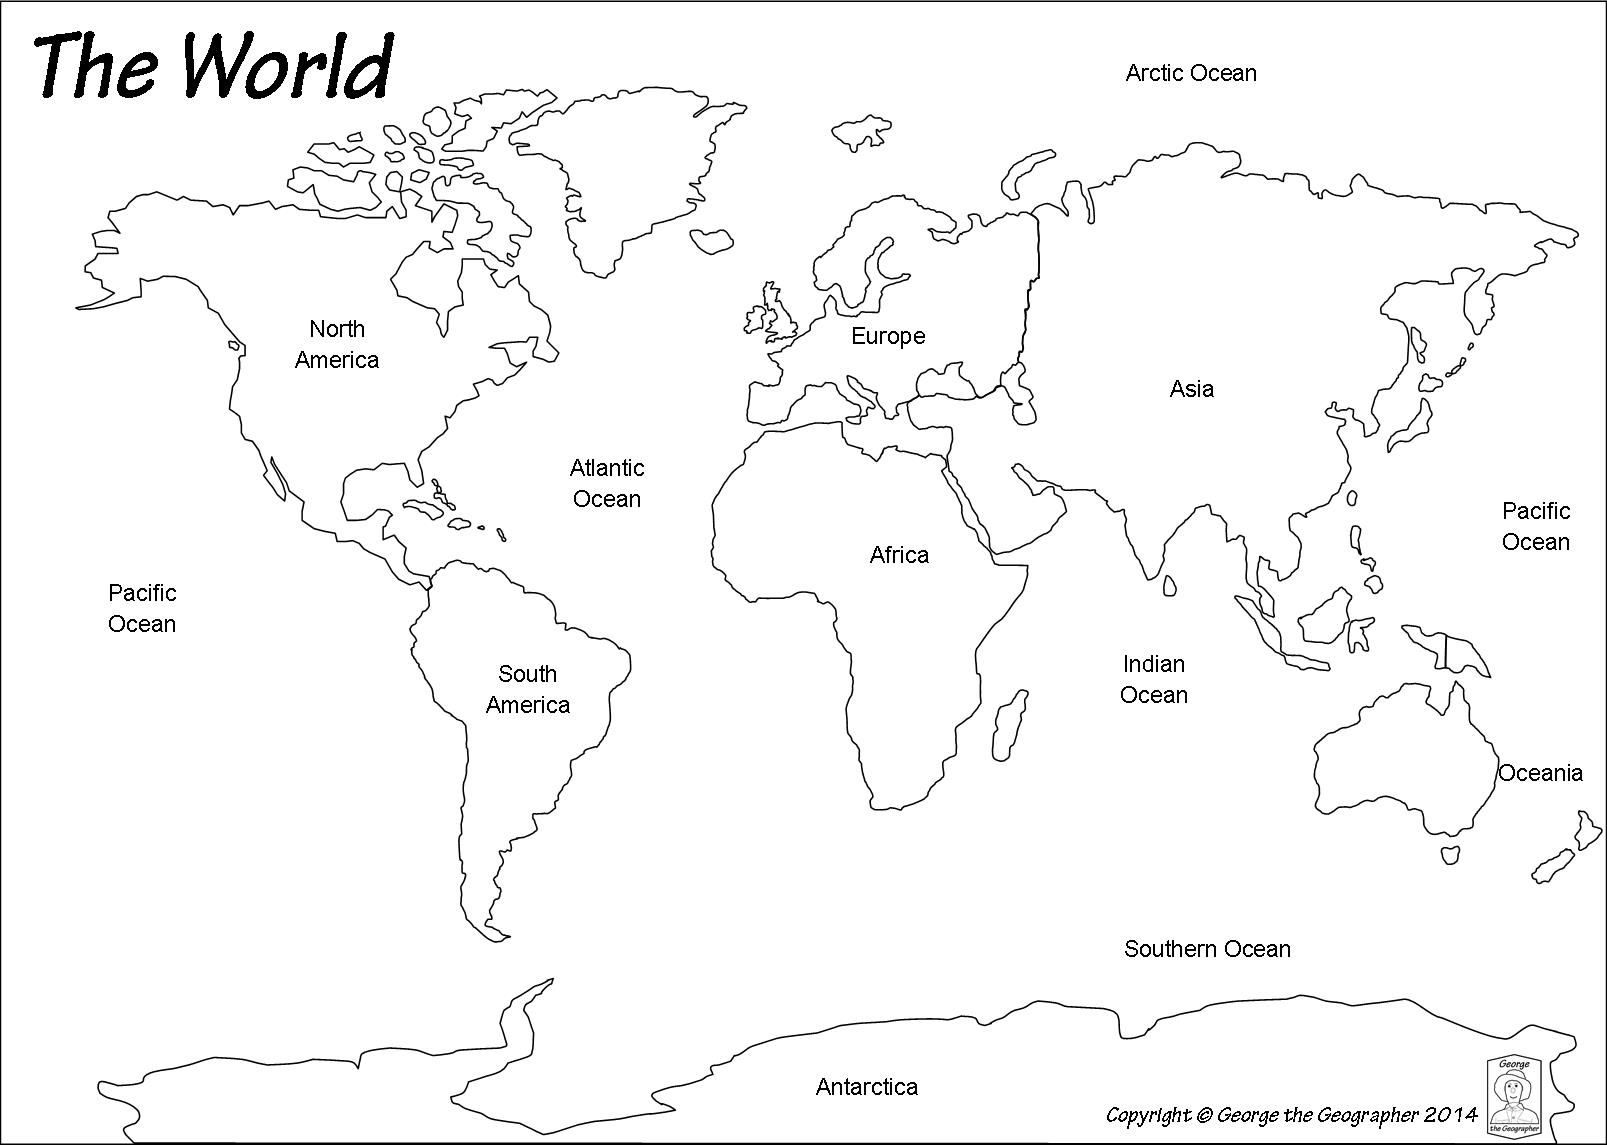 Outline world map.